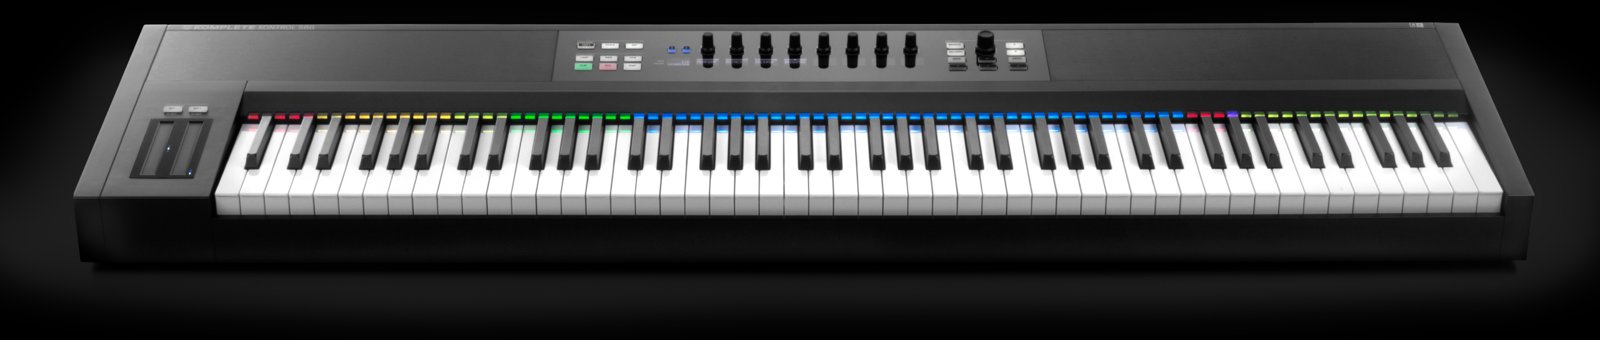 native instruments komplete kontrol s88 mk1 keyboard review